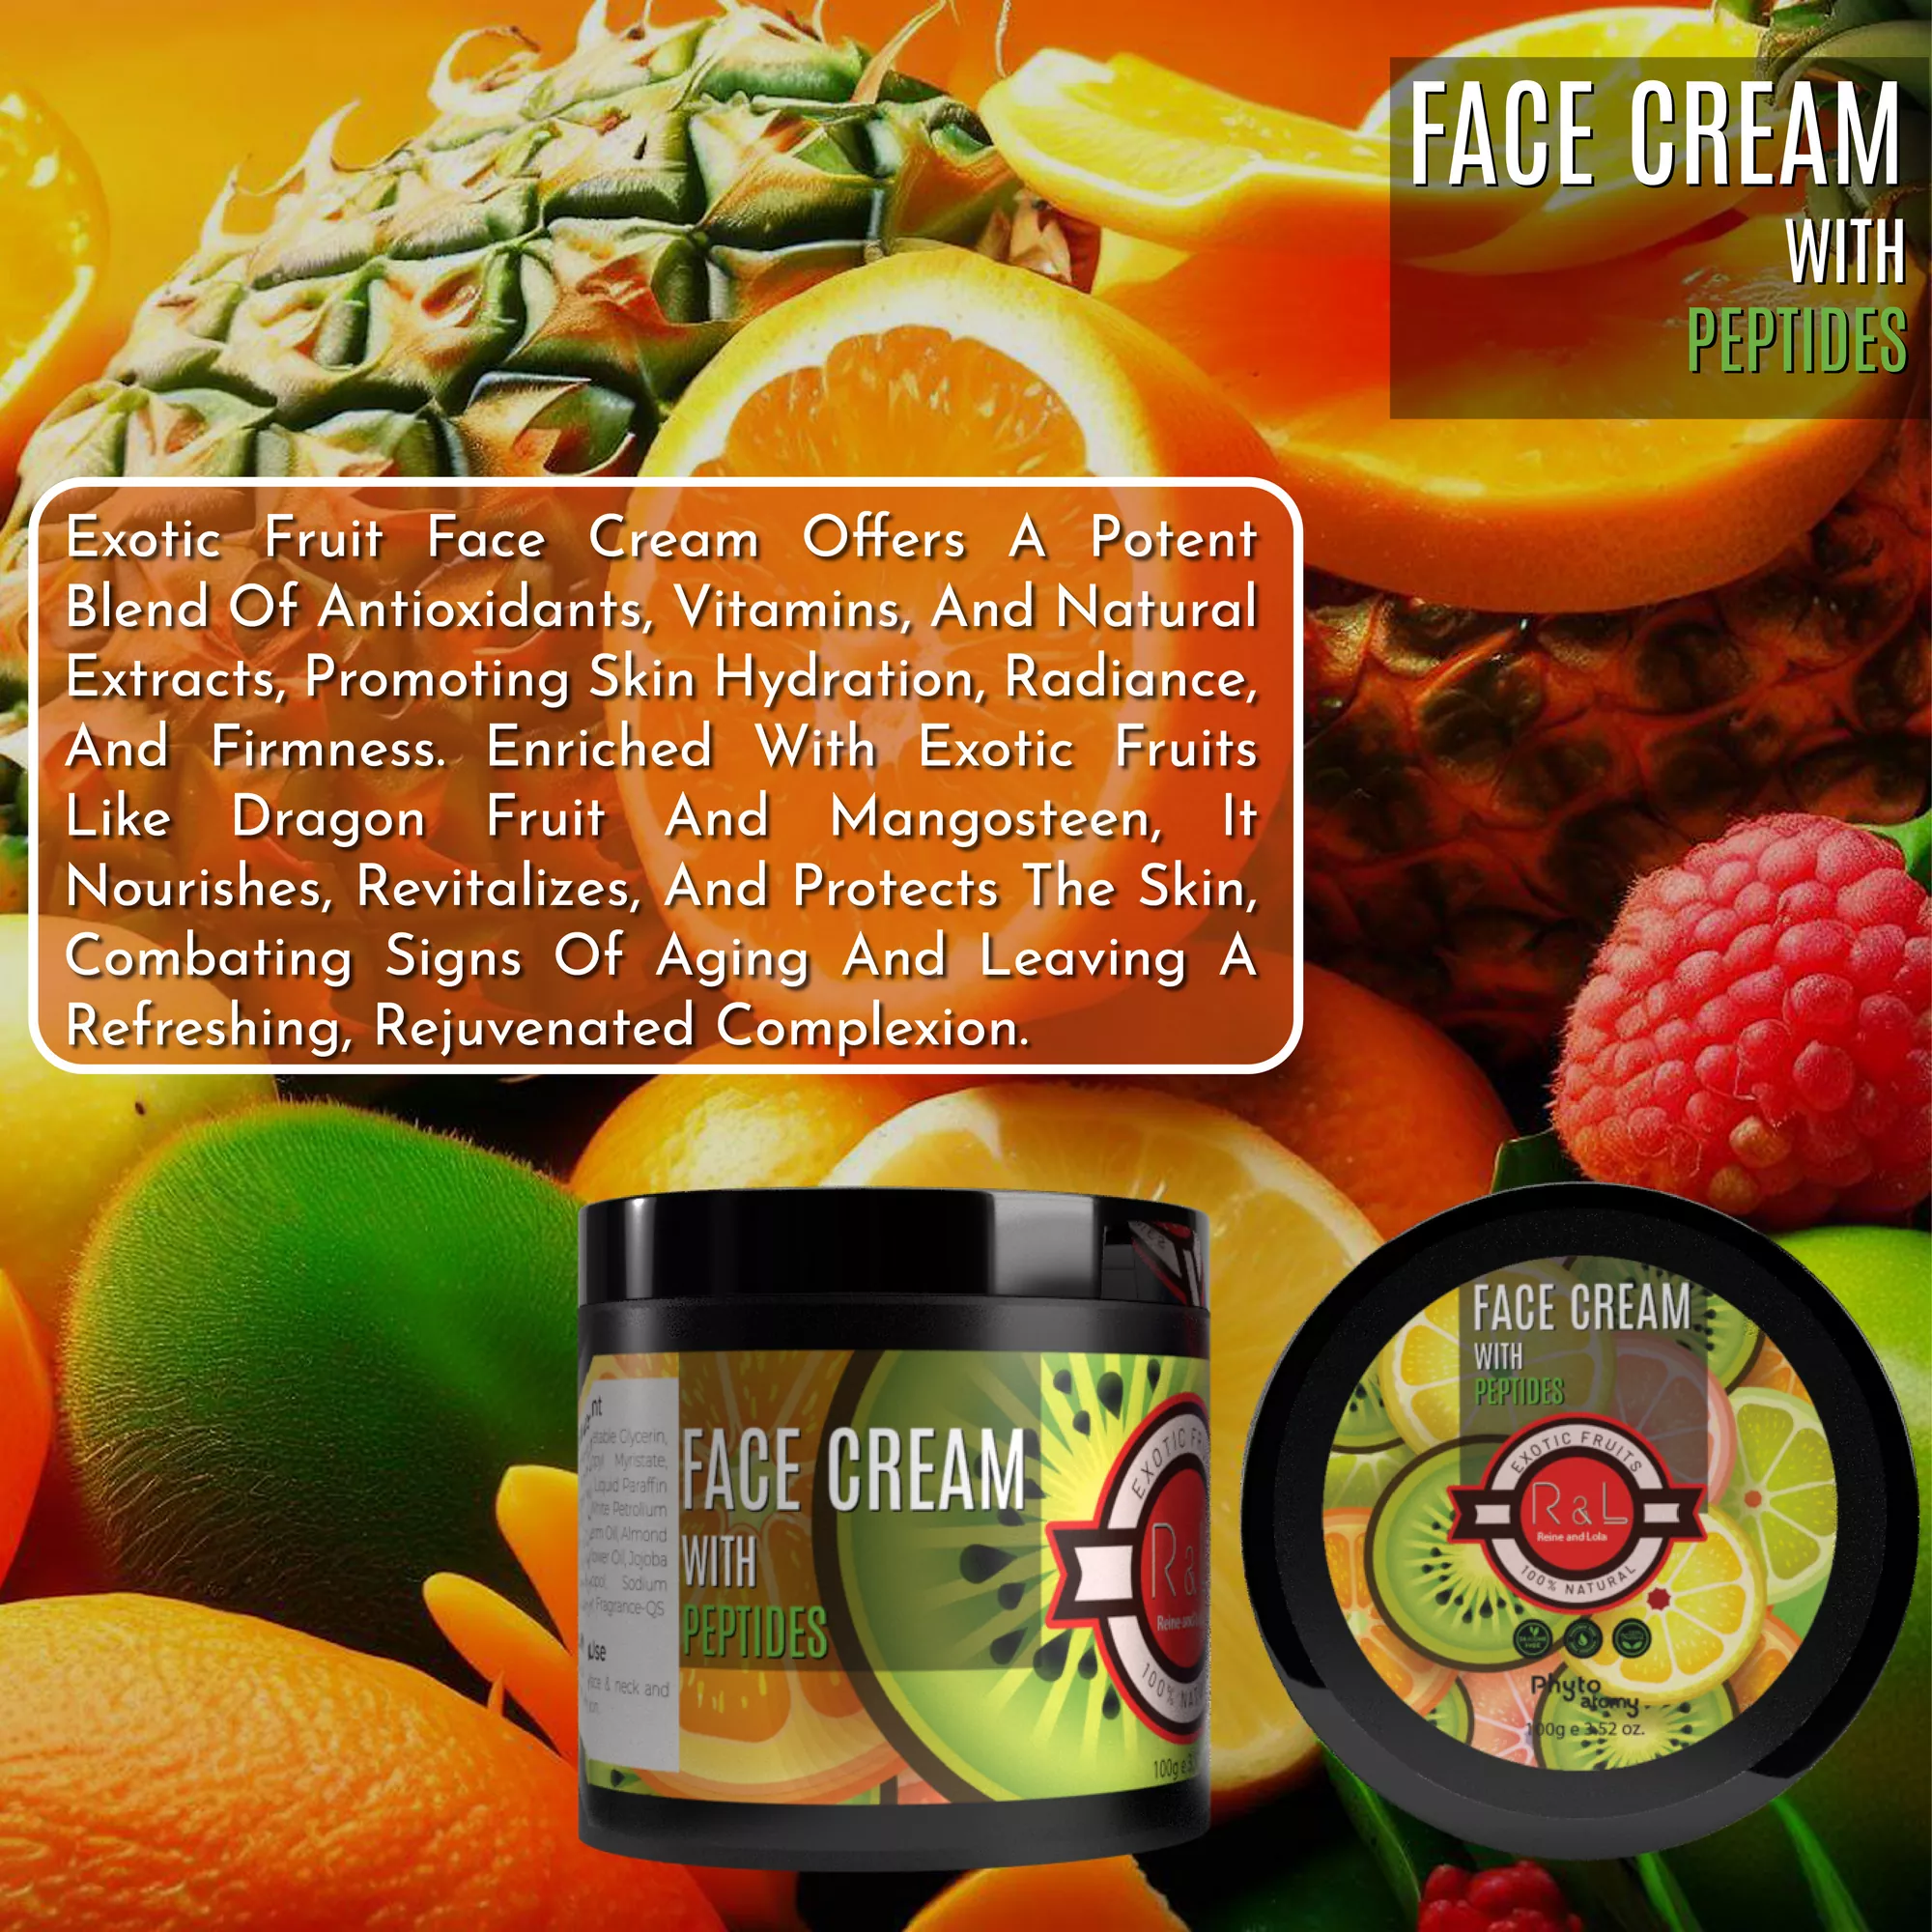 R&L Exotic Fruits Face Cream (100g)